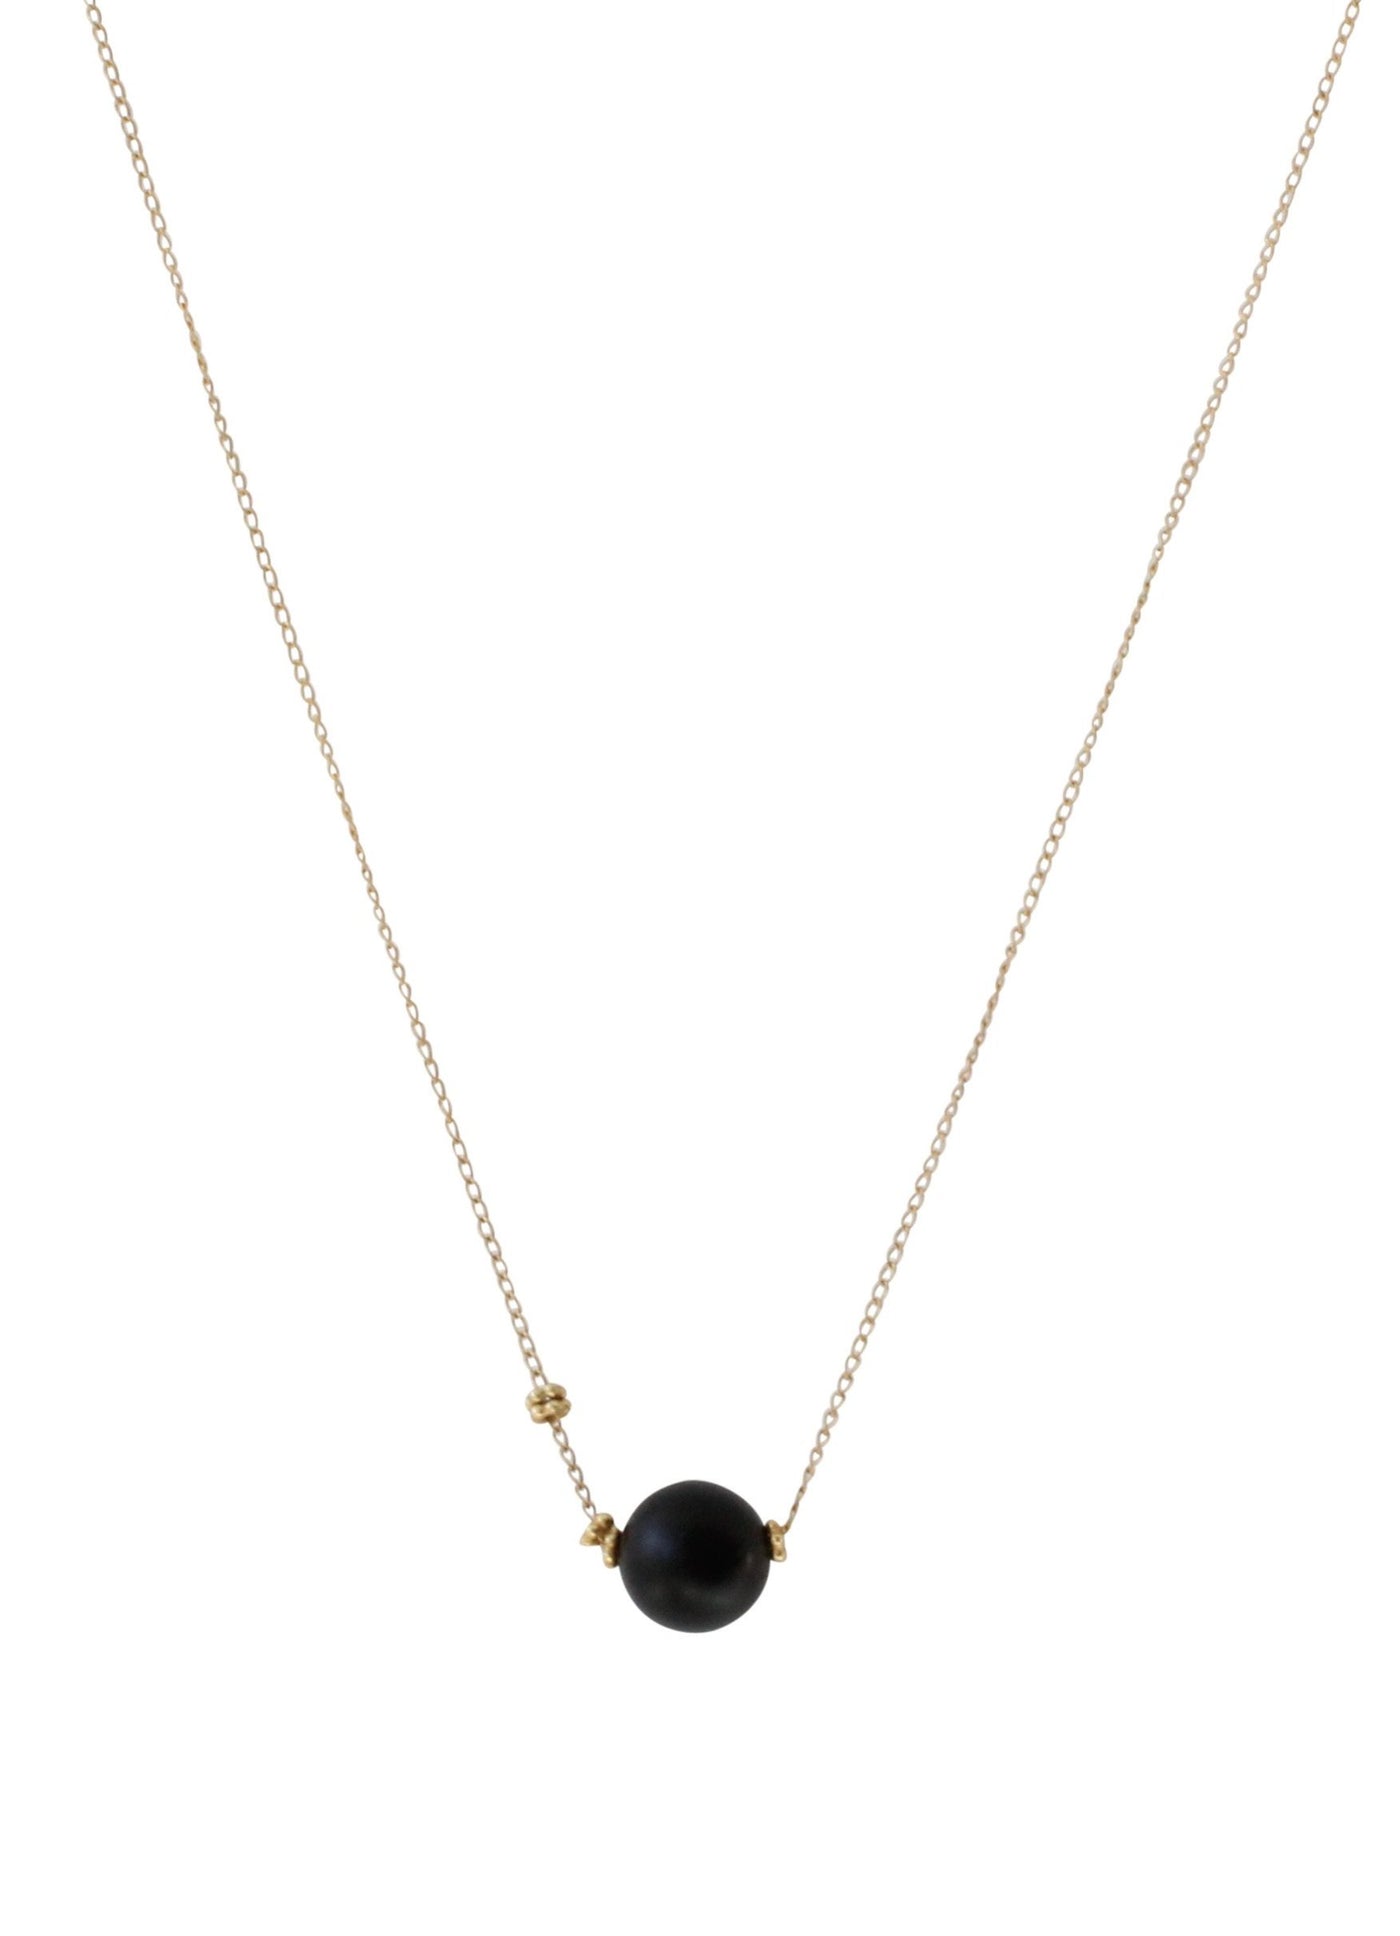 Simple Ball Drop Necklace | Handmade Necklace | Rebecca Scott Jewelry | Black Onyx | Everyday necklace | Minimal jewelry | minimalist style | elegant jewelry | fine jewelry | gifts for women | handmade gift | ethically made jewelry | 